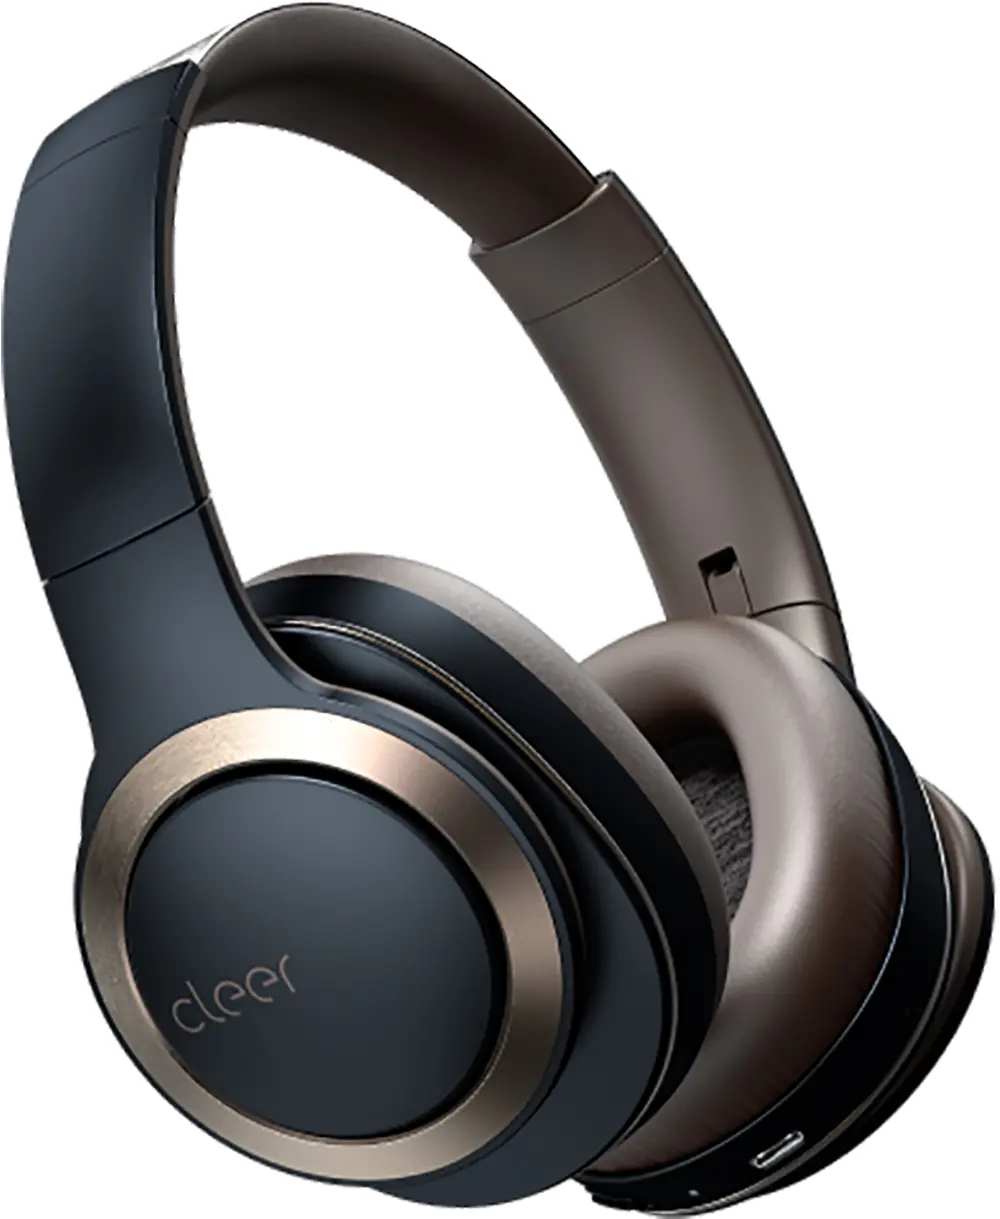 ENDURO2NCNAVUS Cleer Enduro ANC Wireless Noise Cancelling Headphones - Navy Blue-1